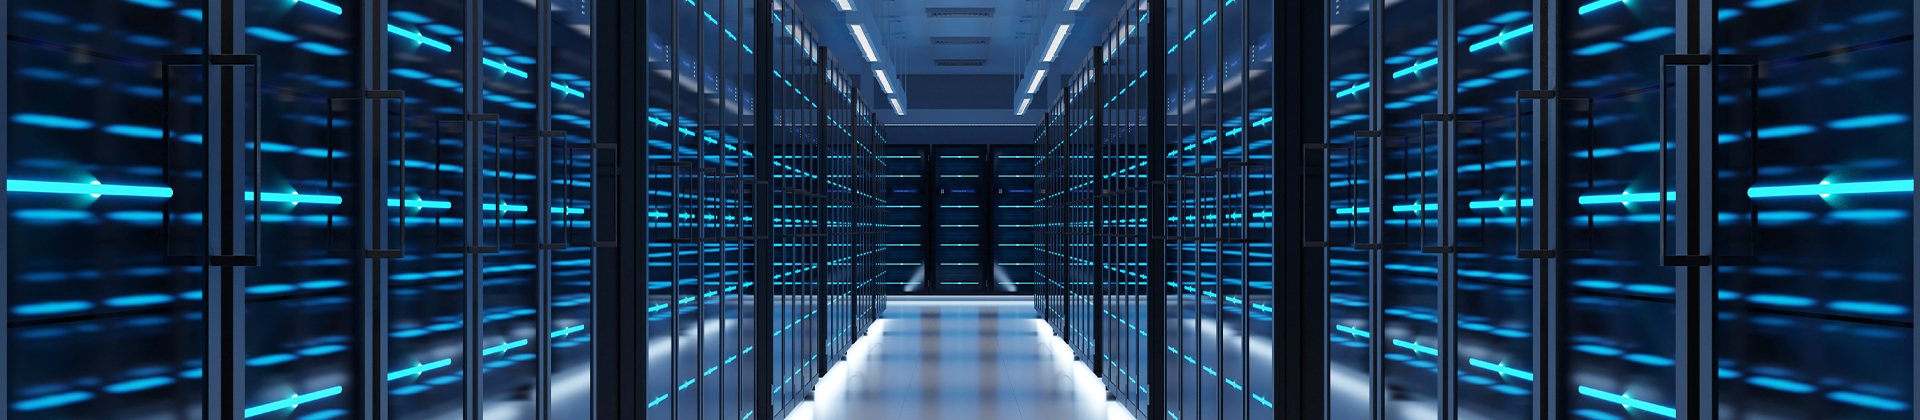 Wide image of a data center server room